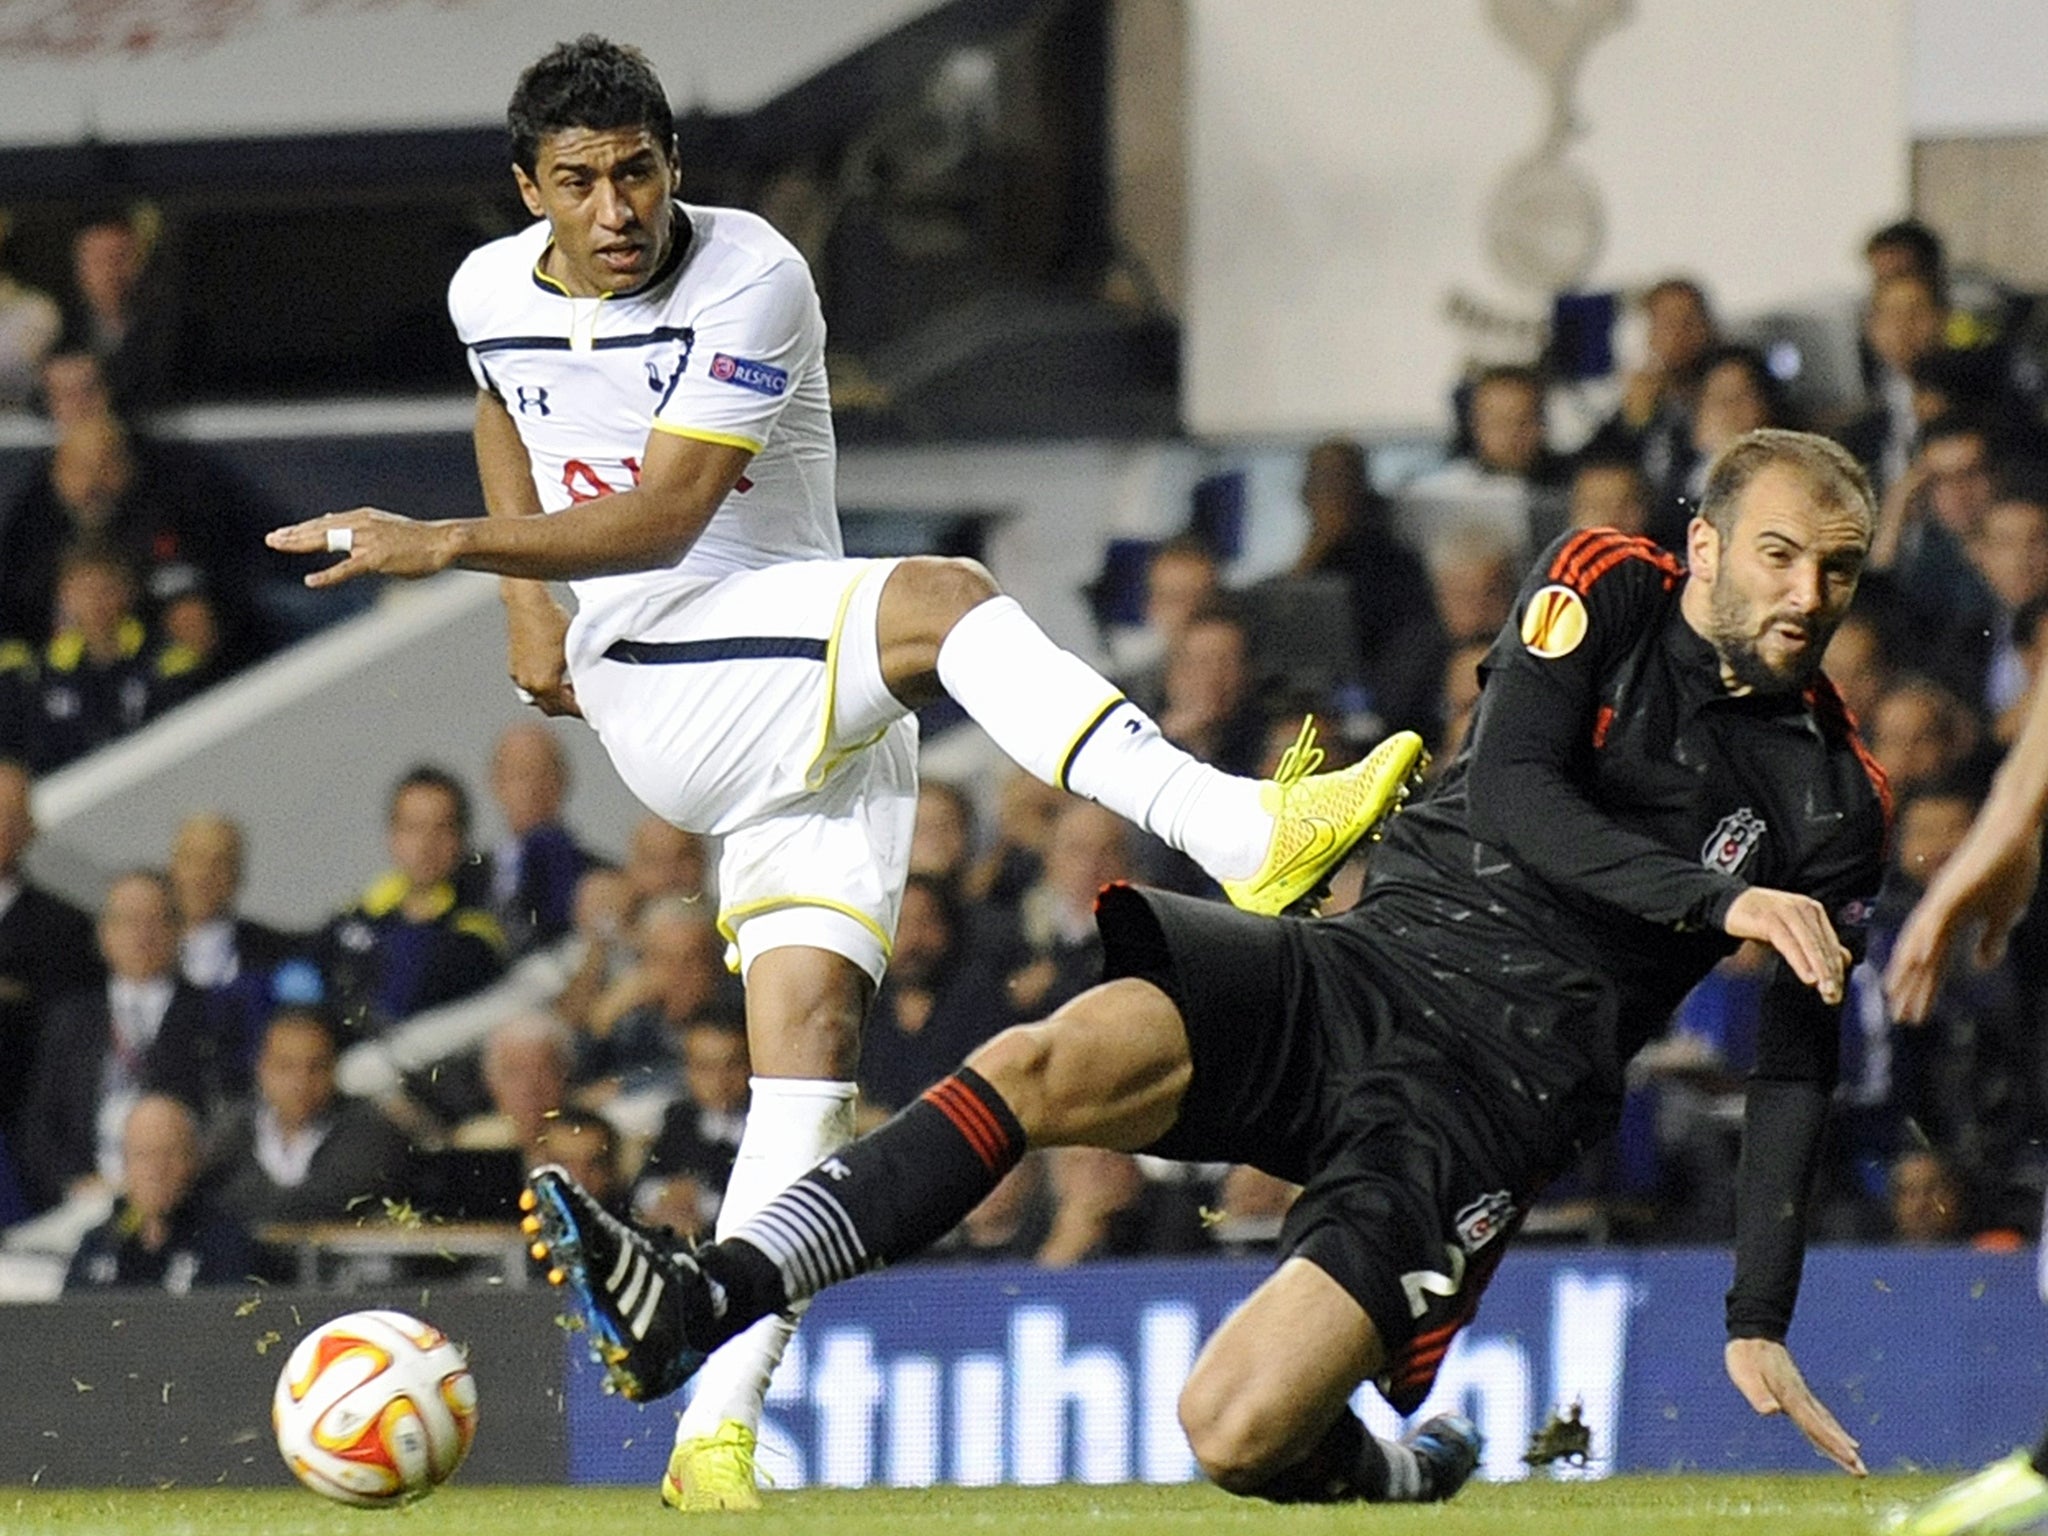 Tottenham Hotspur's Paulinho (left) has his shot stopped by Besiktas JK's Serdar Kurtulus